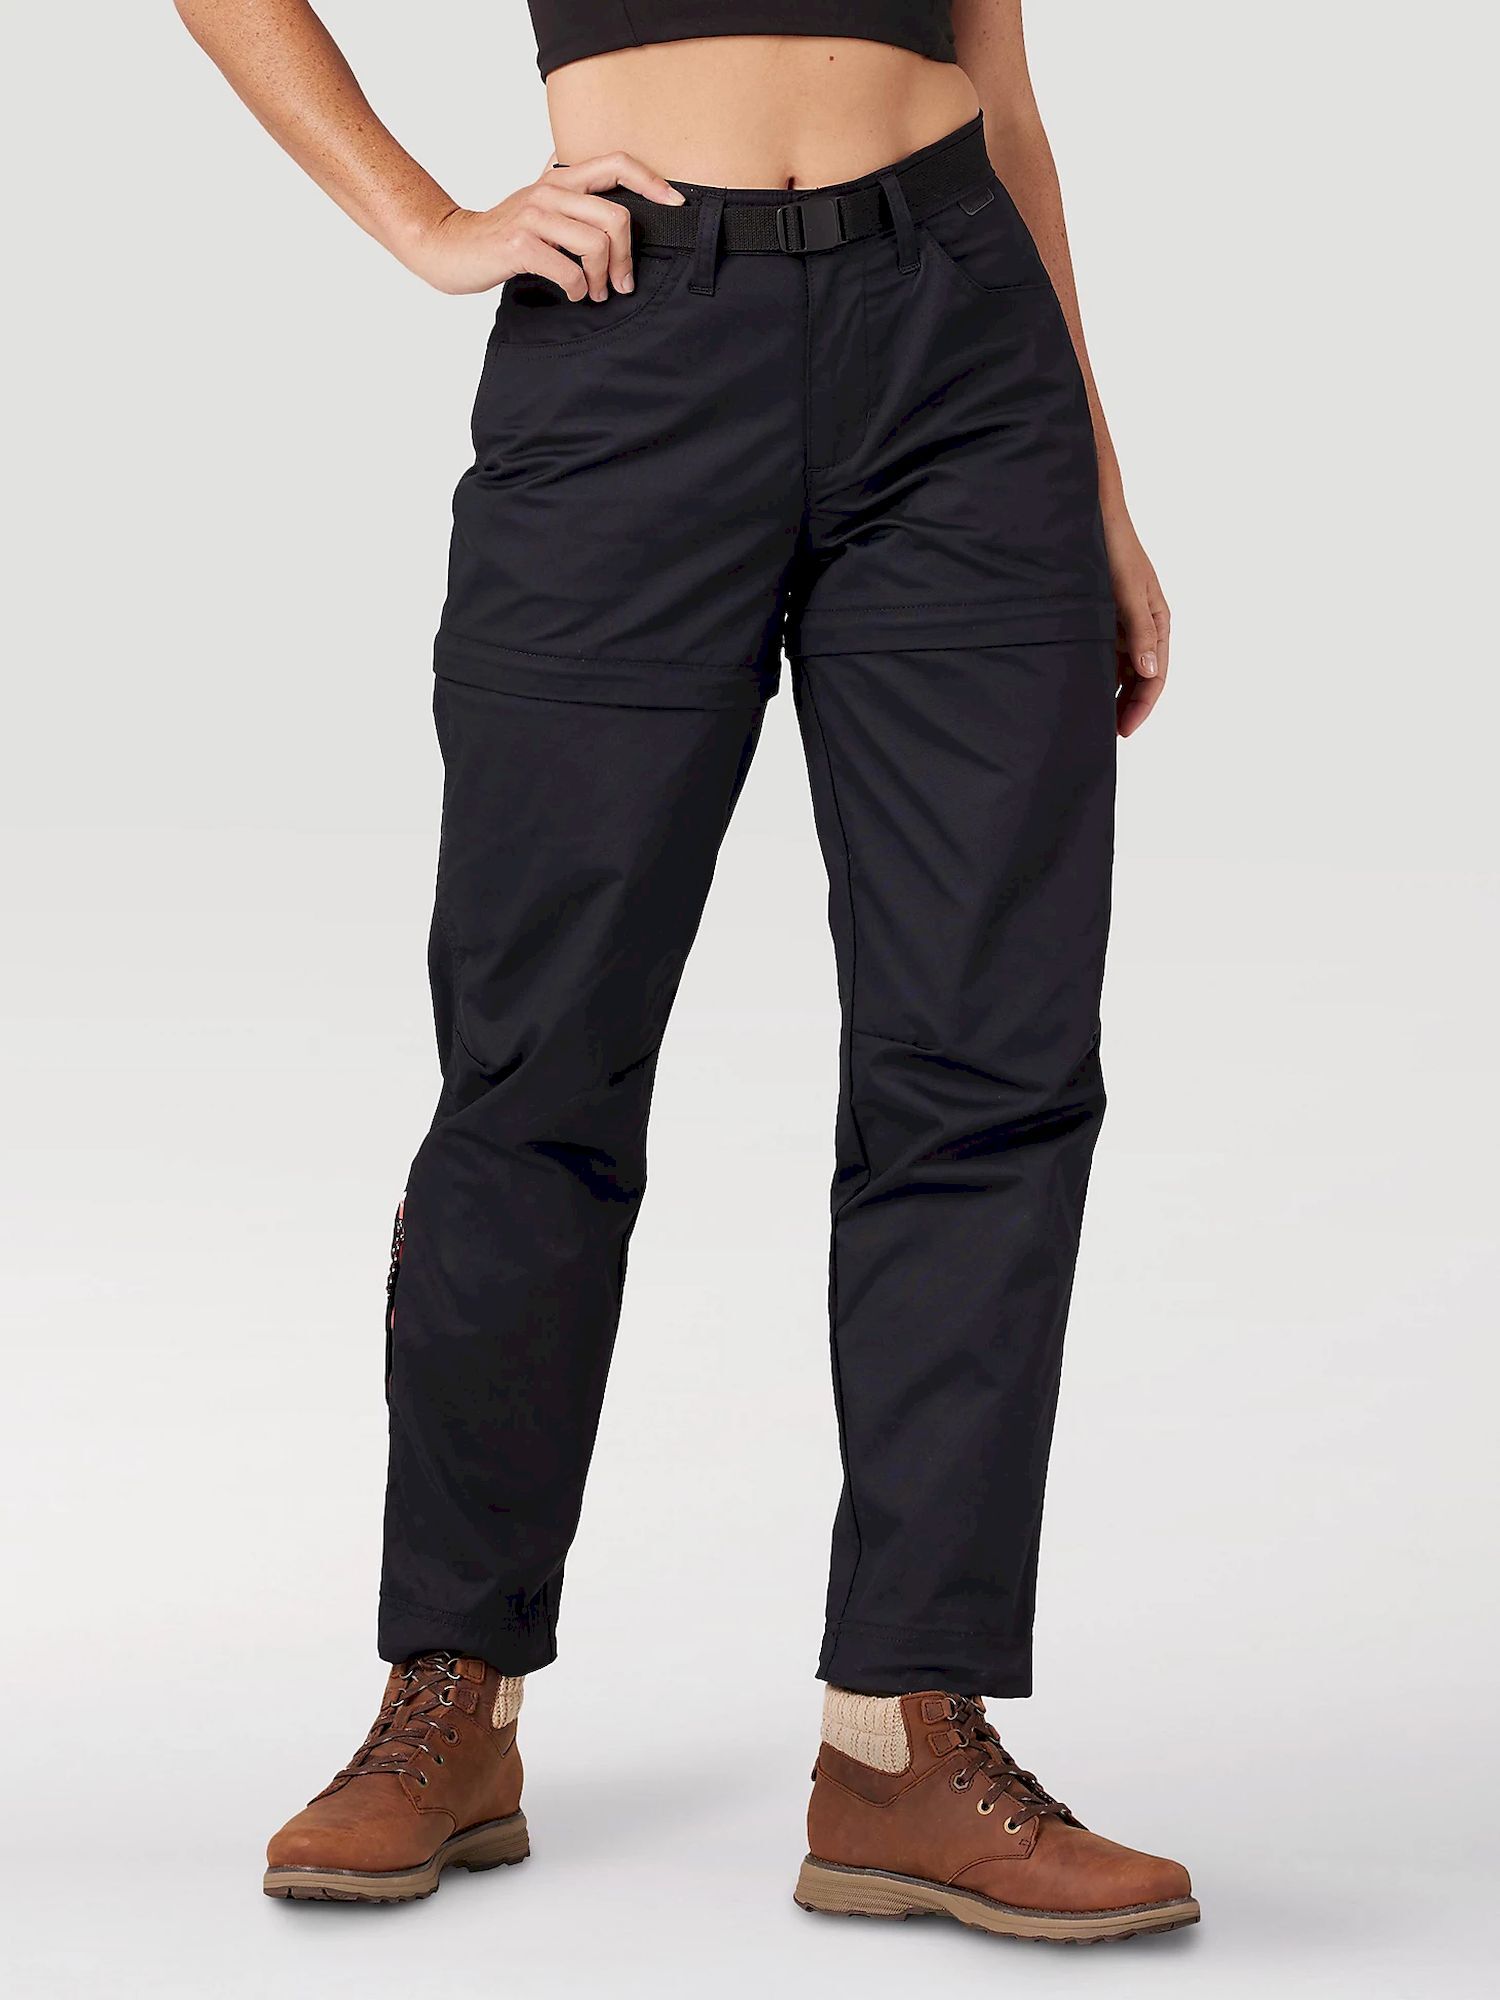 Wrangler All Terrain Gear Packable Zipoff Pant - Pantalon randonnée femme | Hardloop